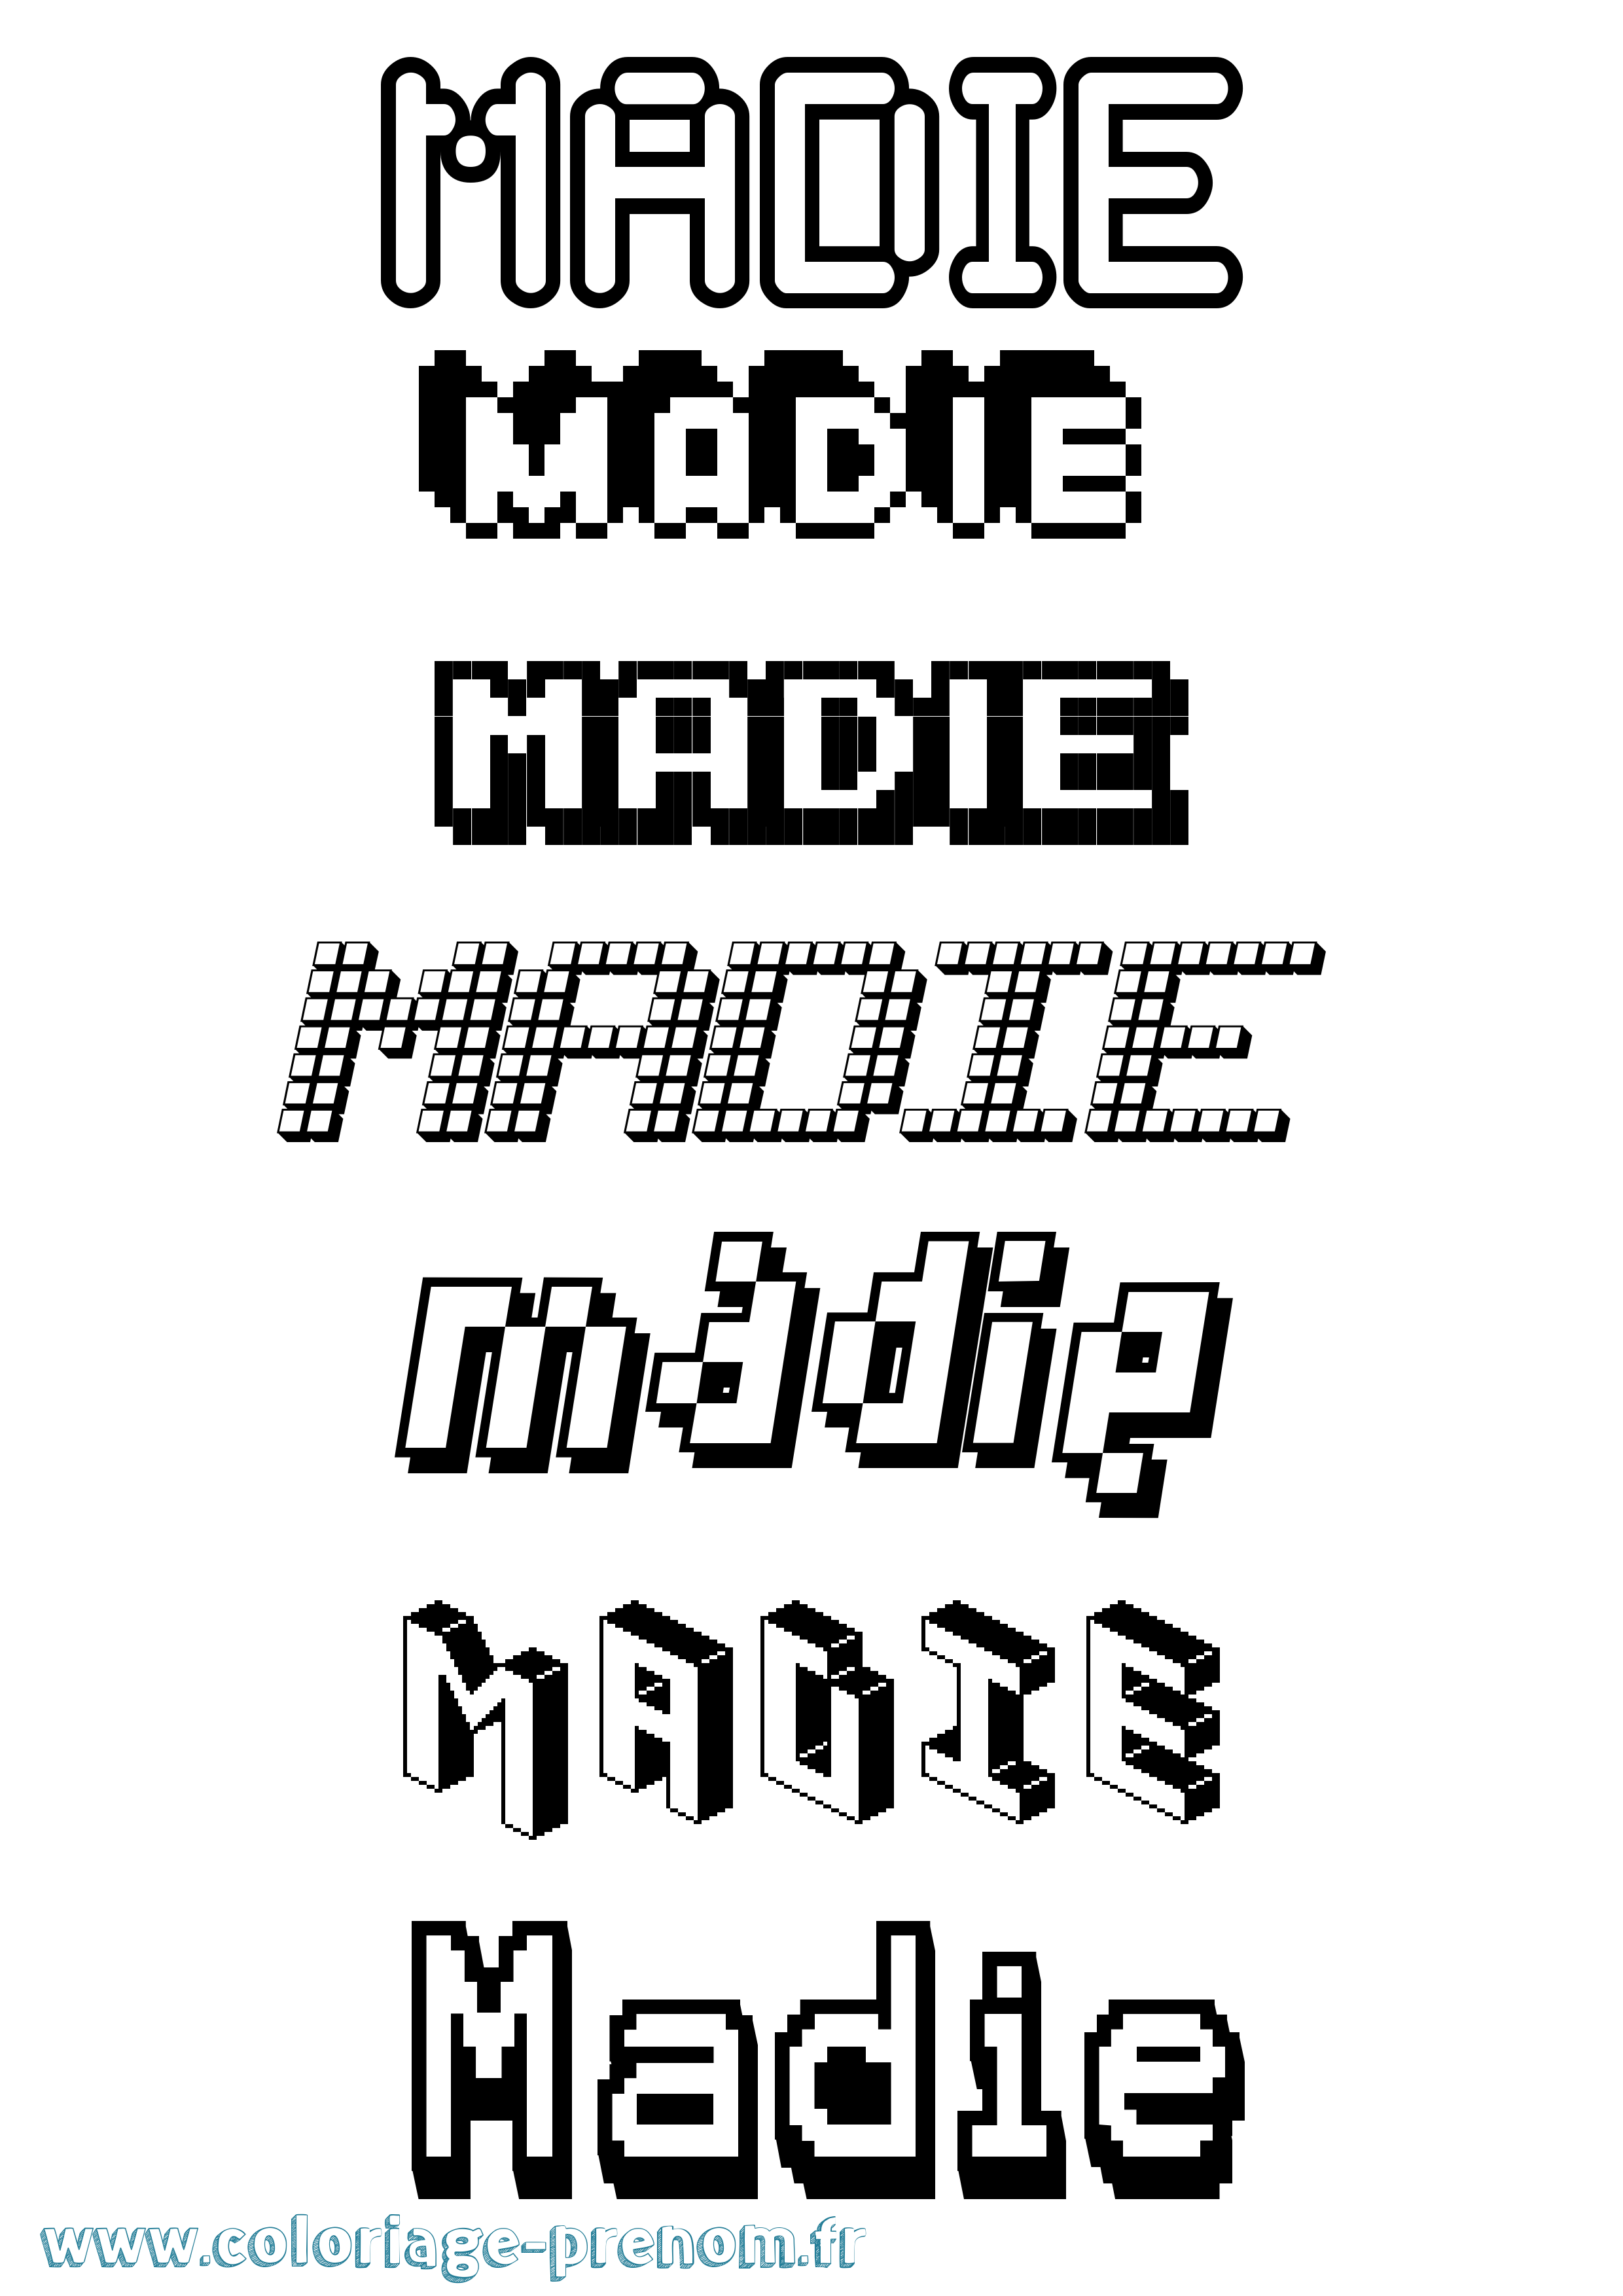 Coloriage prénom Madie Pixel